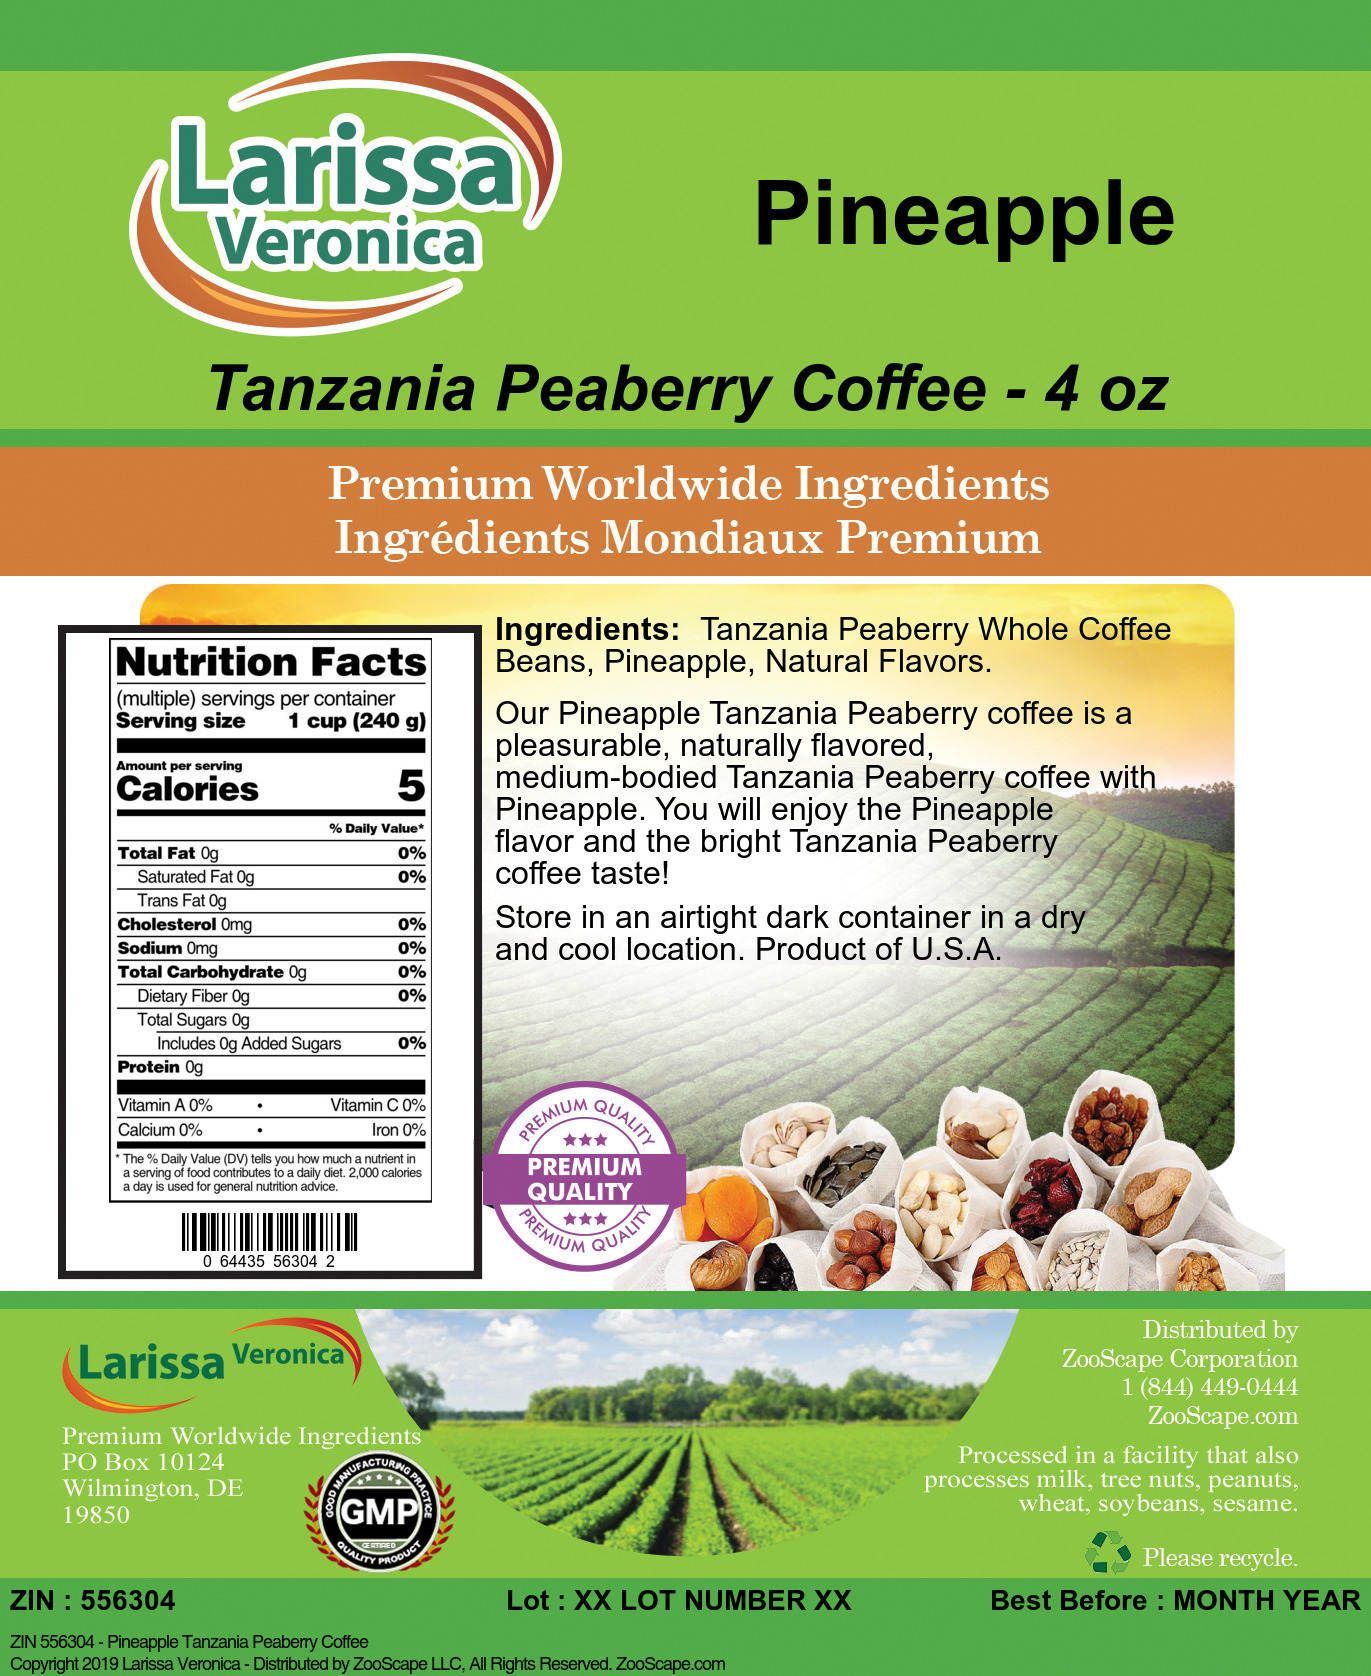 Pineapple Tanzania Peaberry Coffee - Label